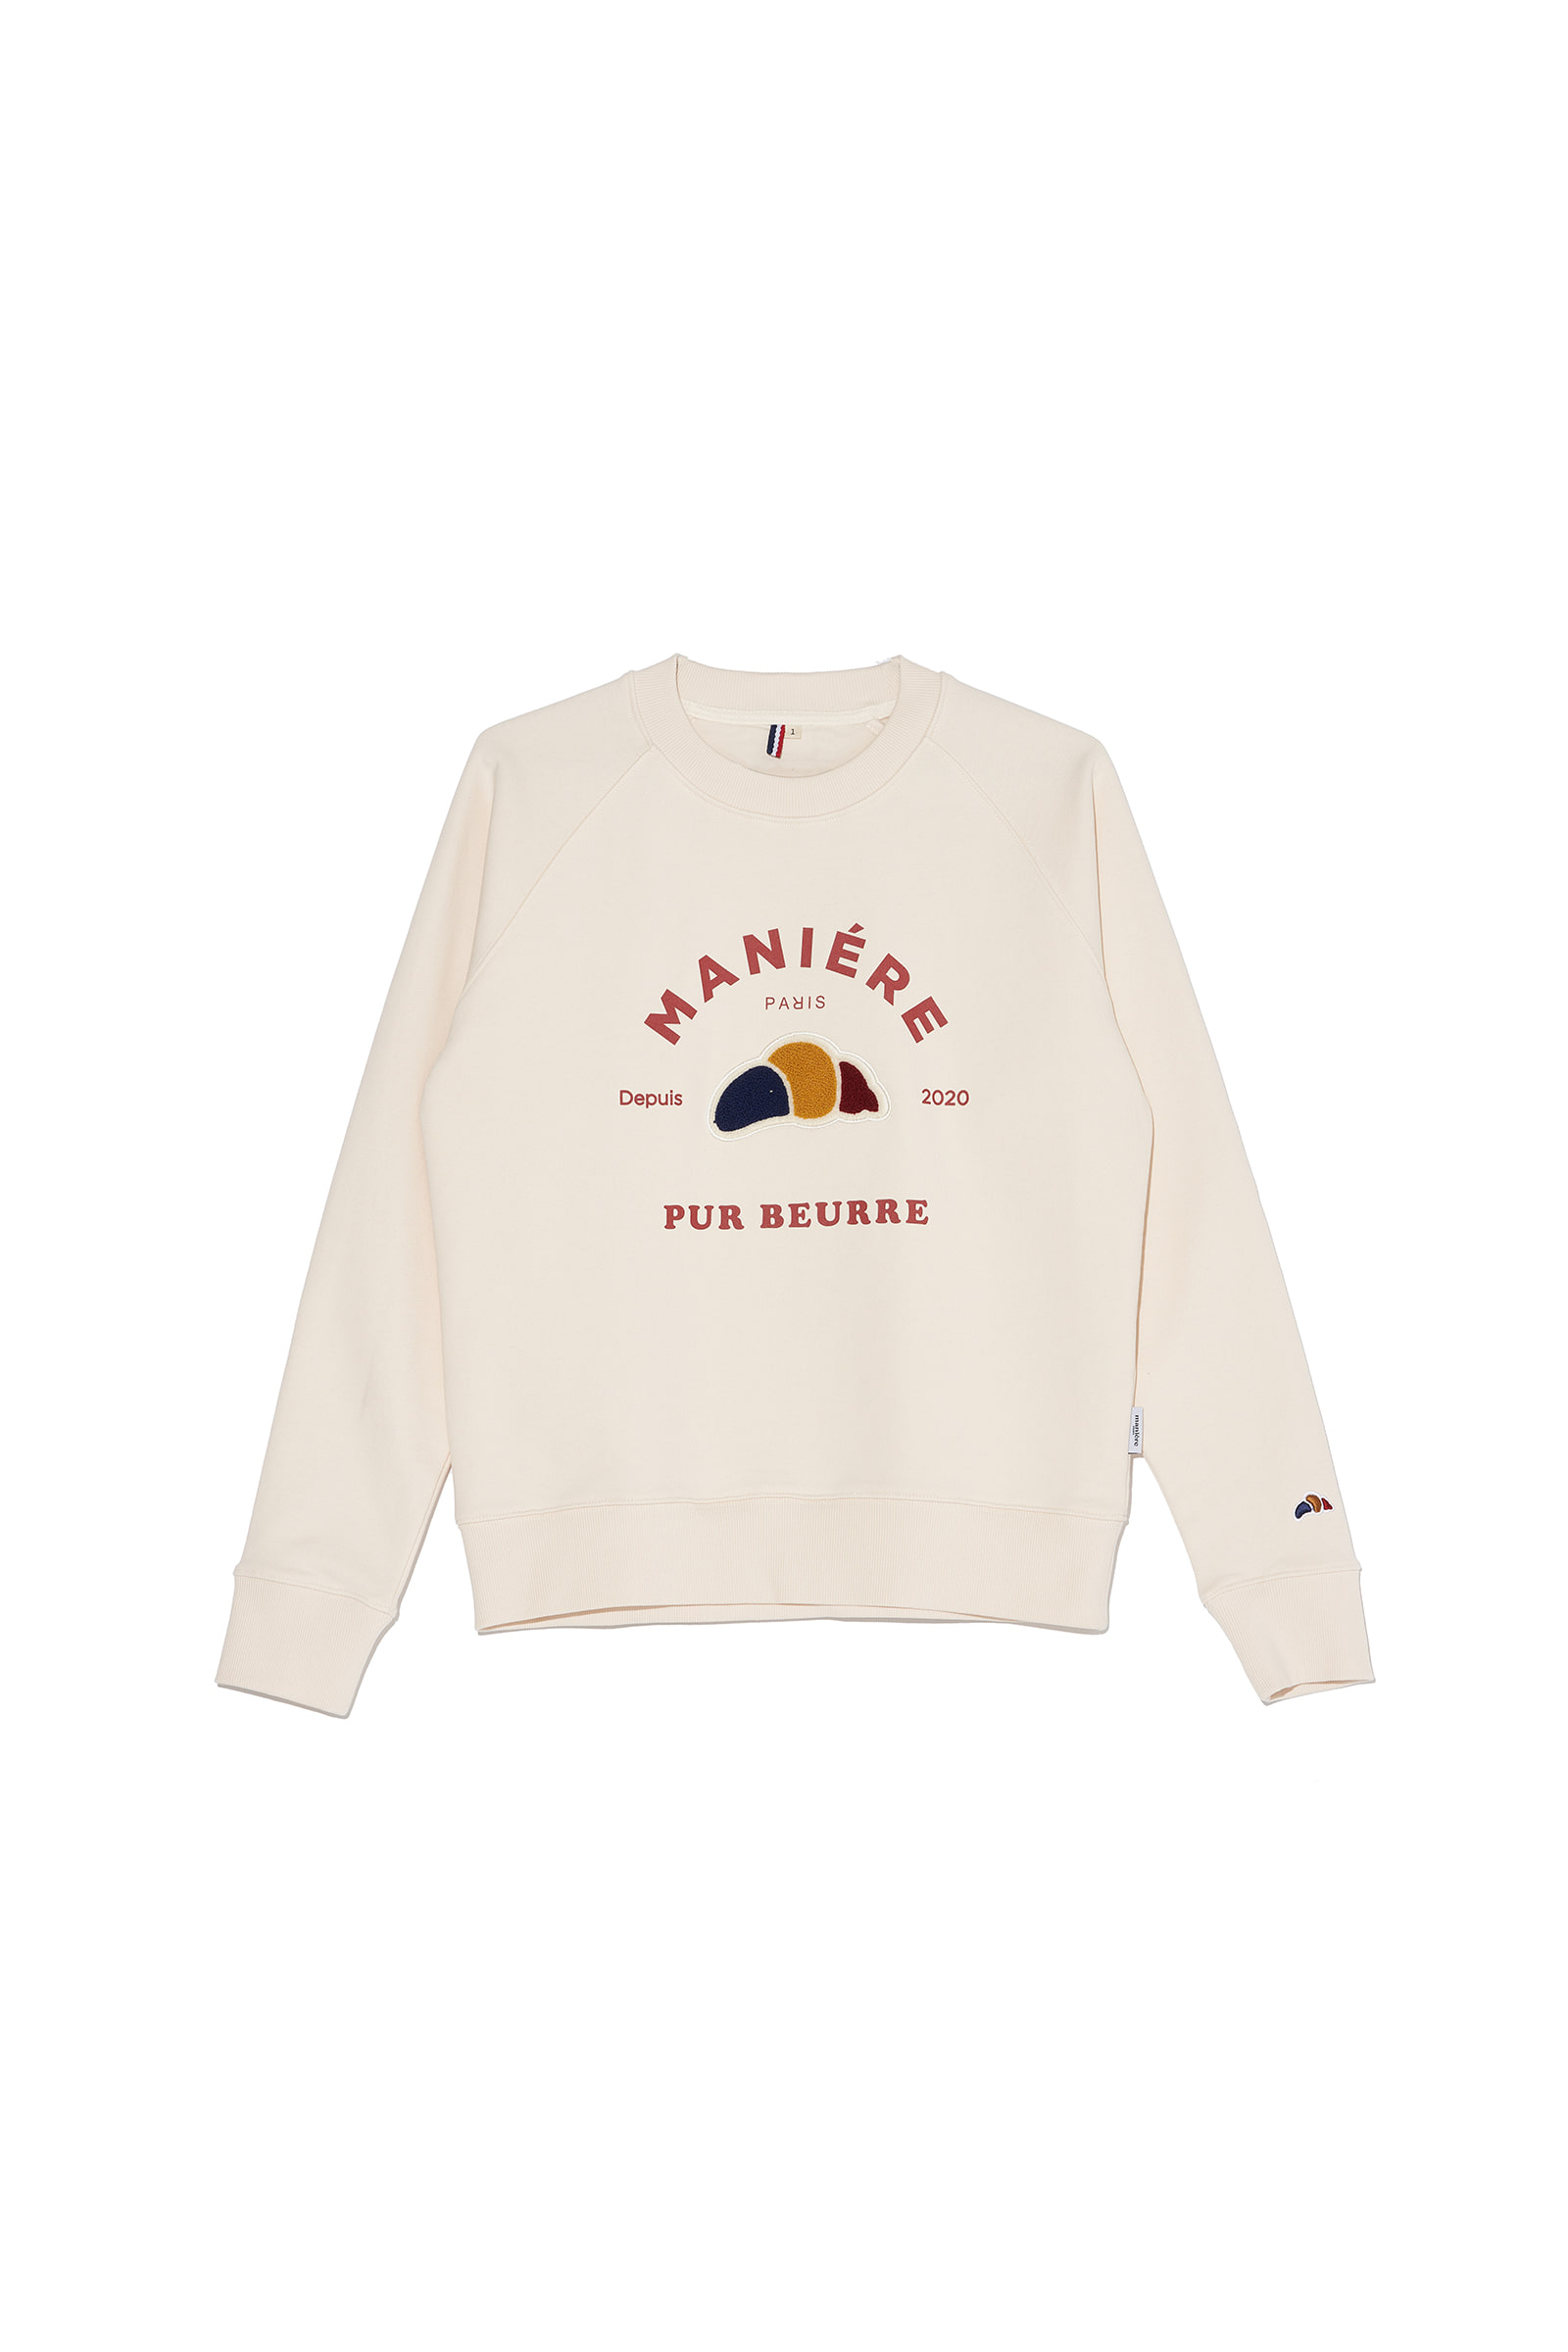 ep.6 Croissant patch sweatshirts (Ivory)